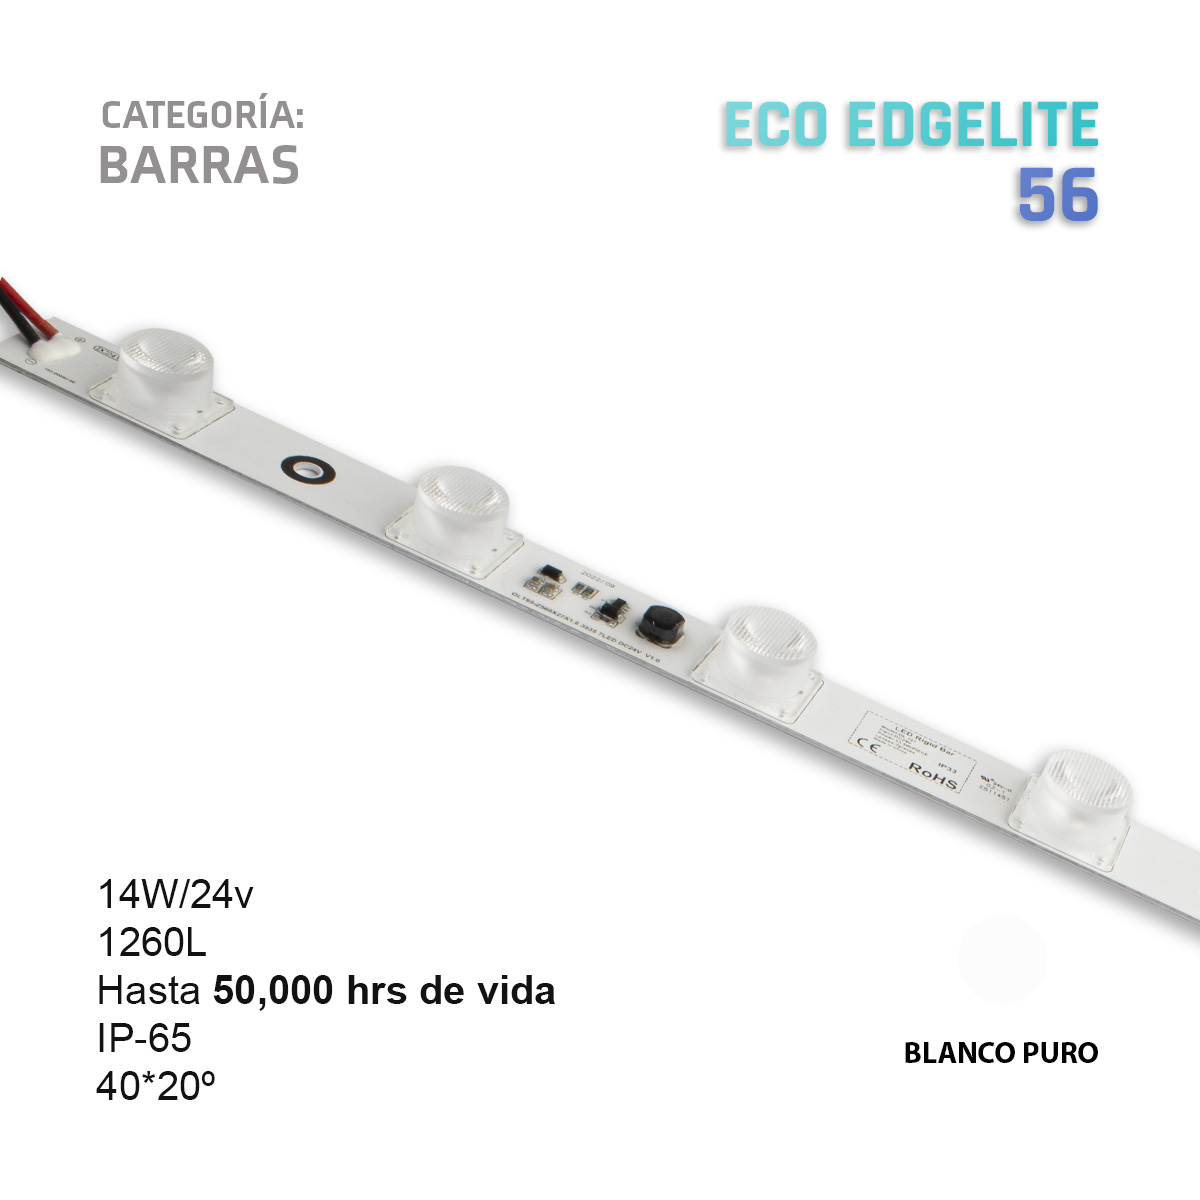 Barra LED Eco Edgelite 56